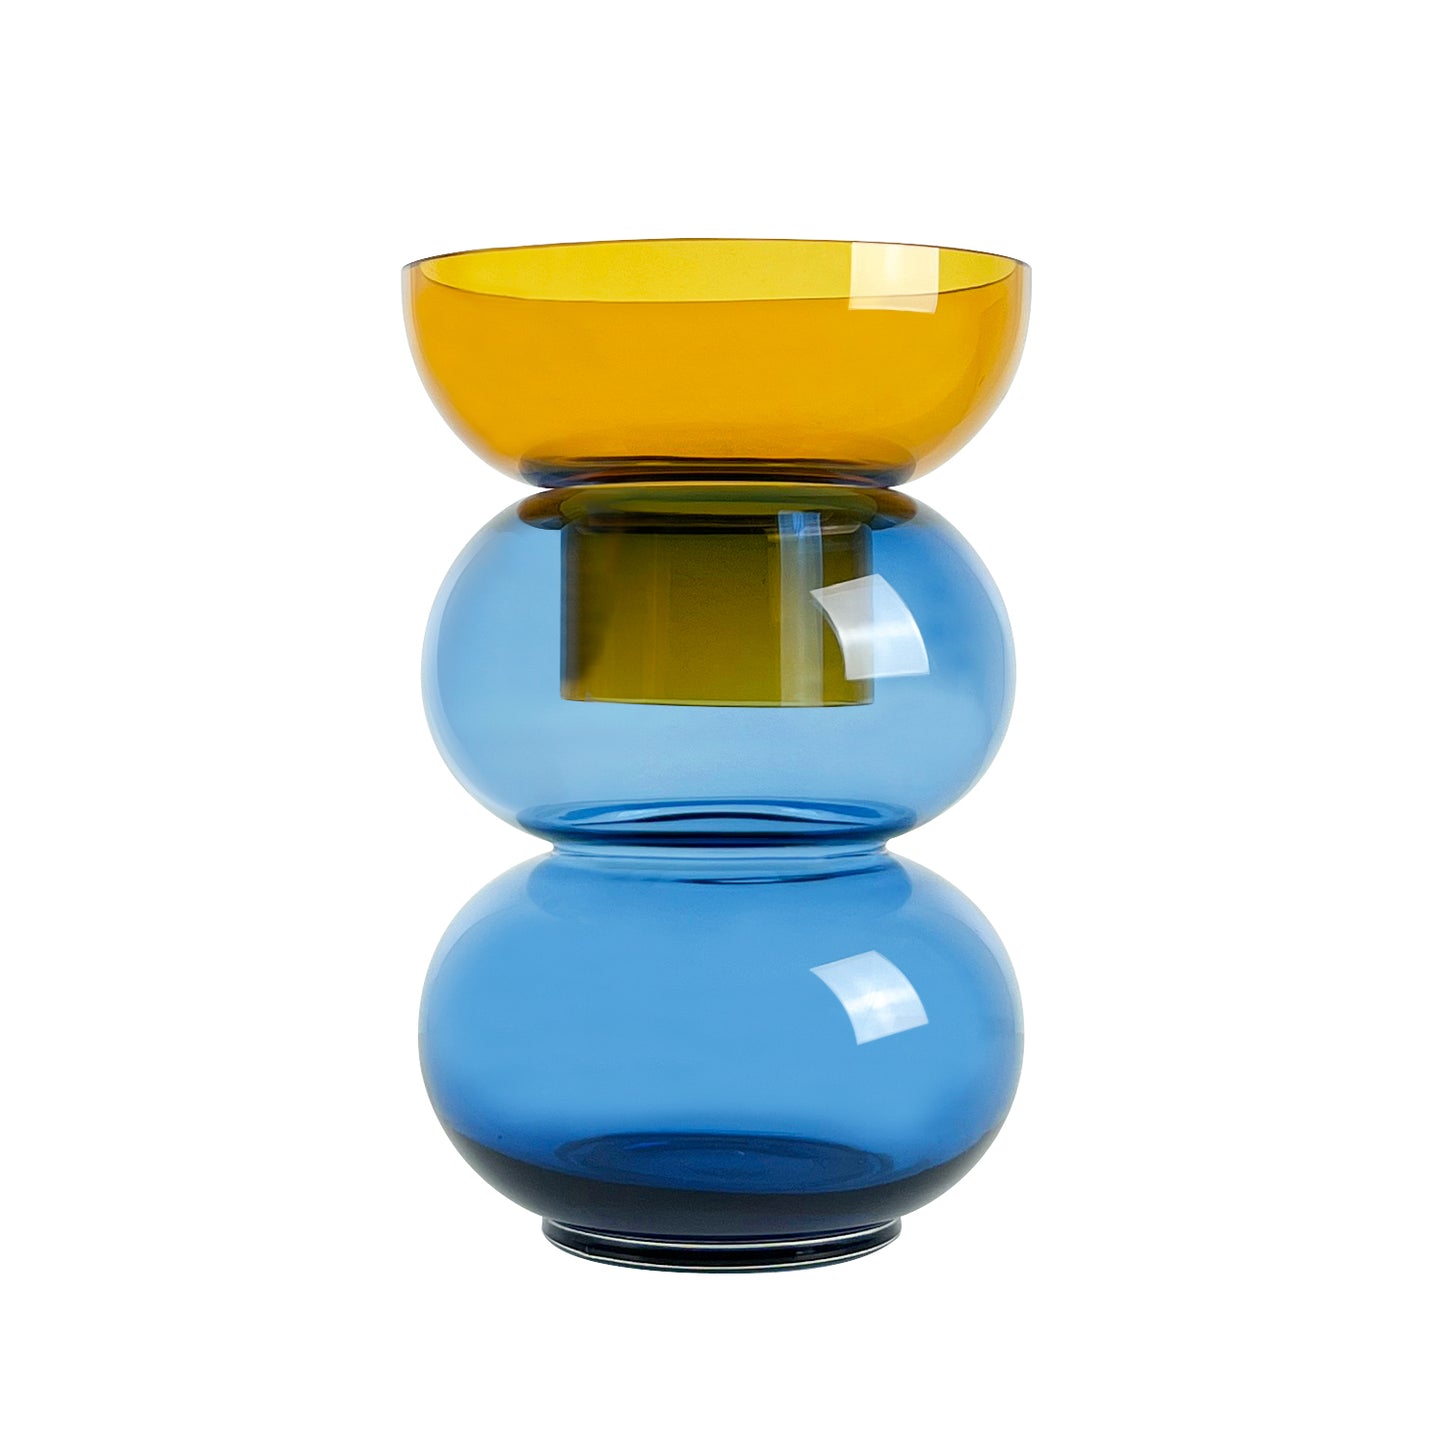 Bubble Vase in Large Yellow and Blue - 30.5 x 20.5 x 20.5 x cm - Flip Vase - Reversible